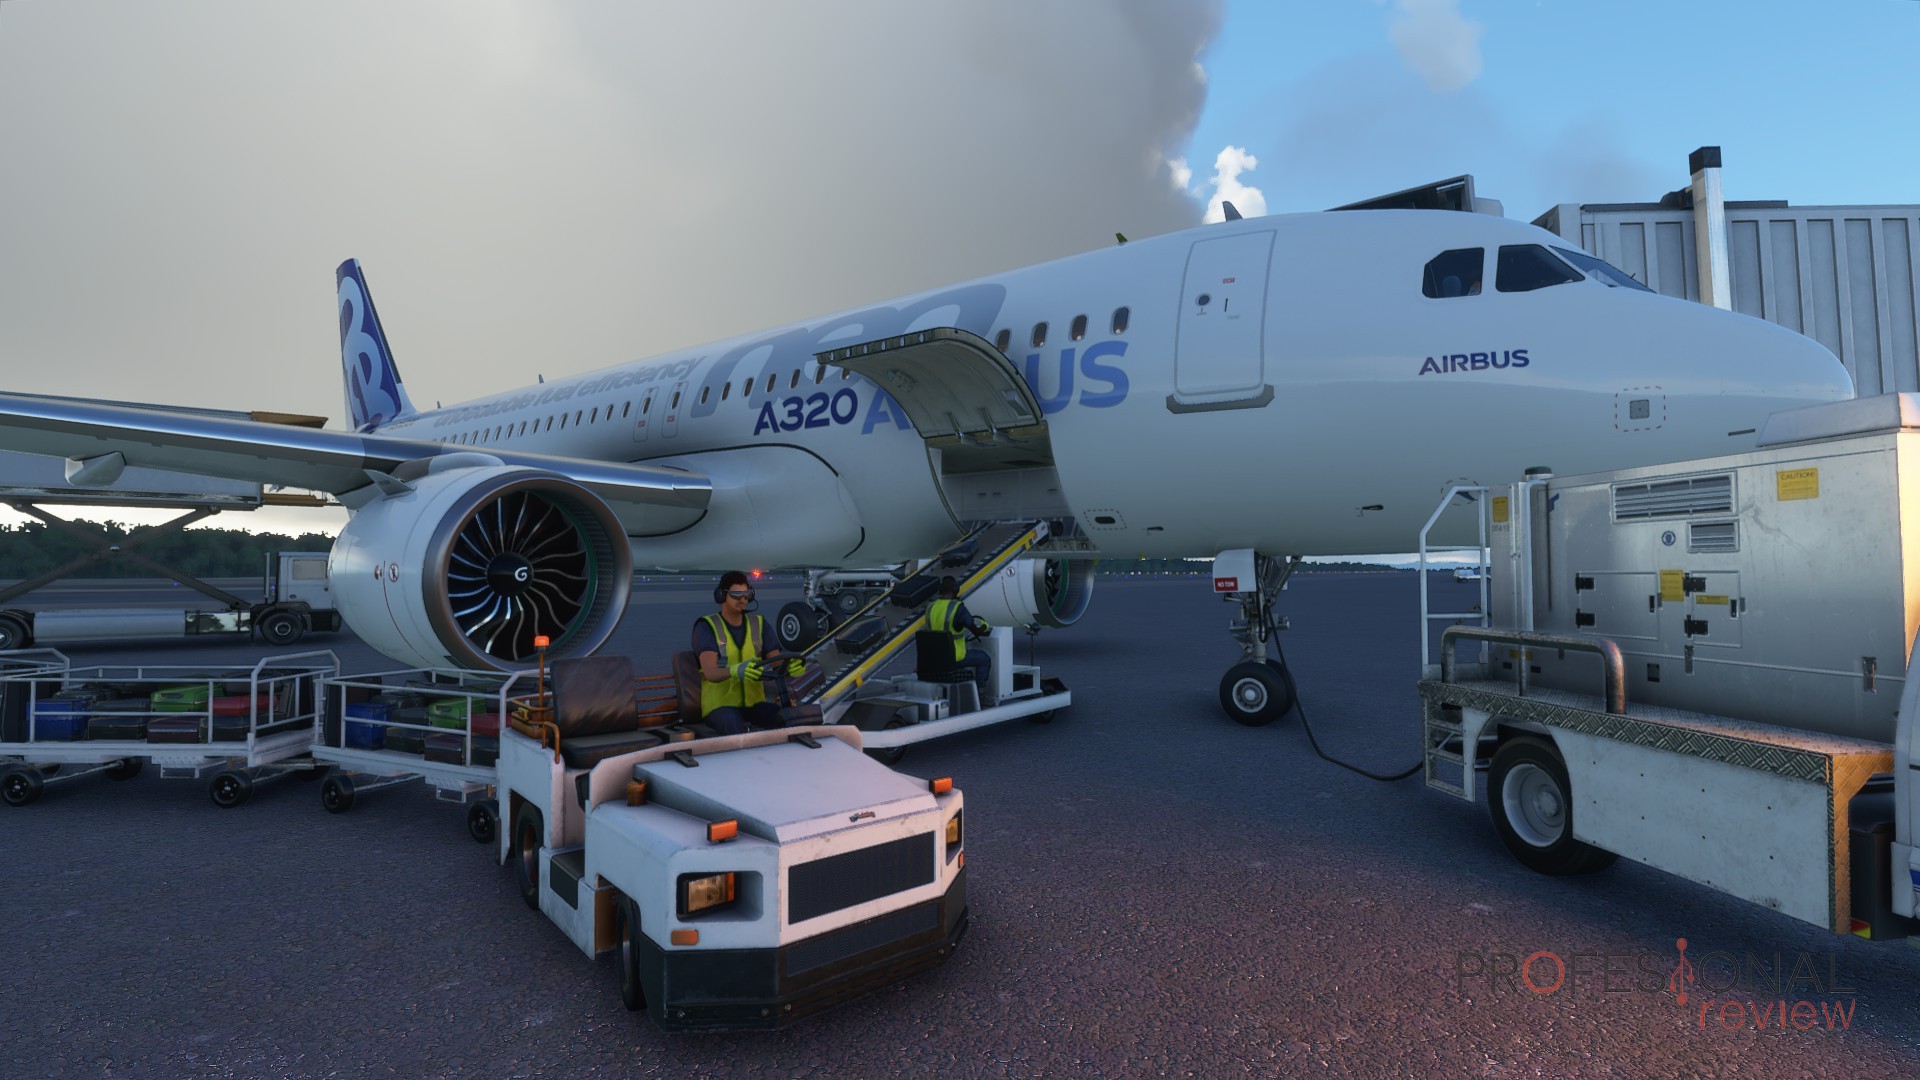 microsoft flight simulator 2015 gameplay